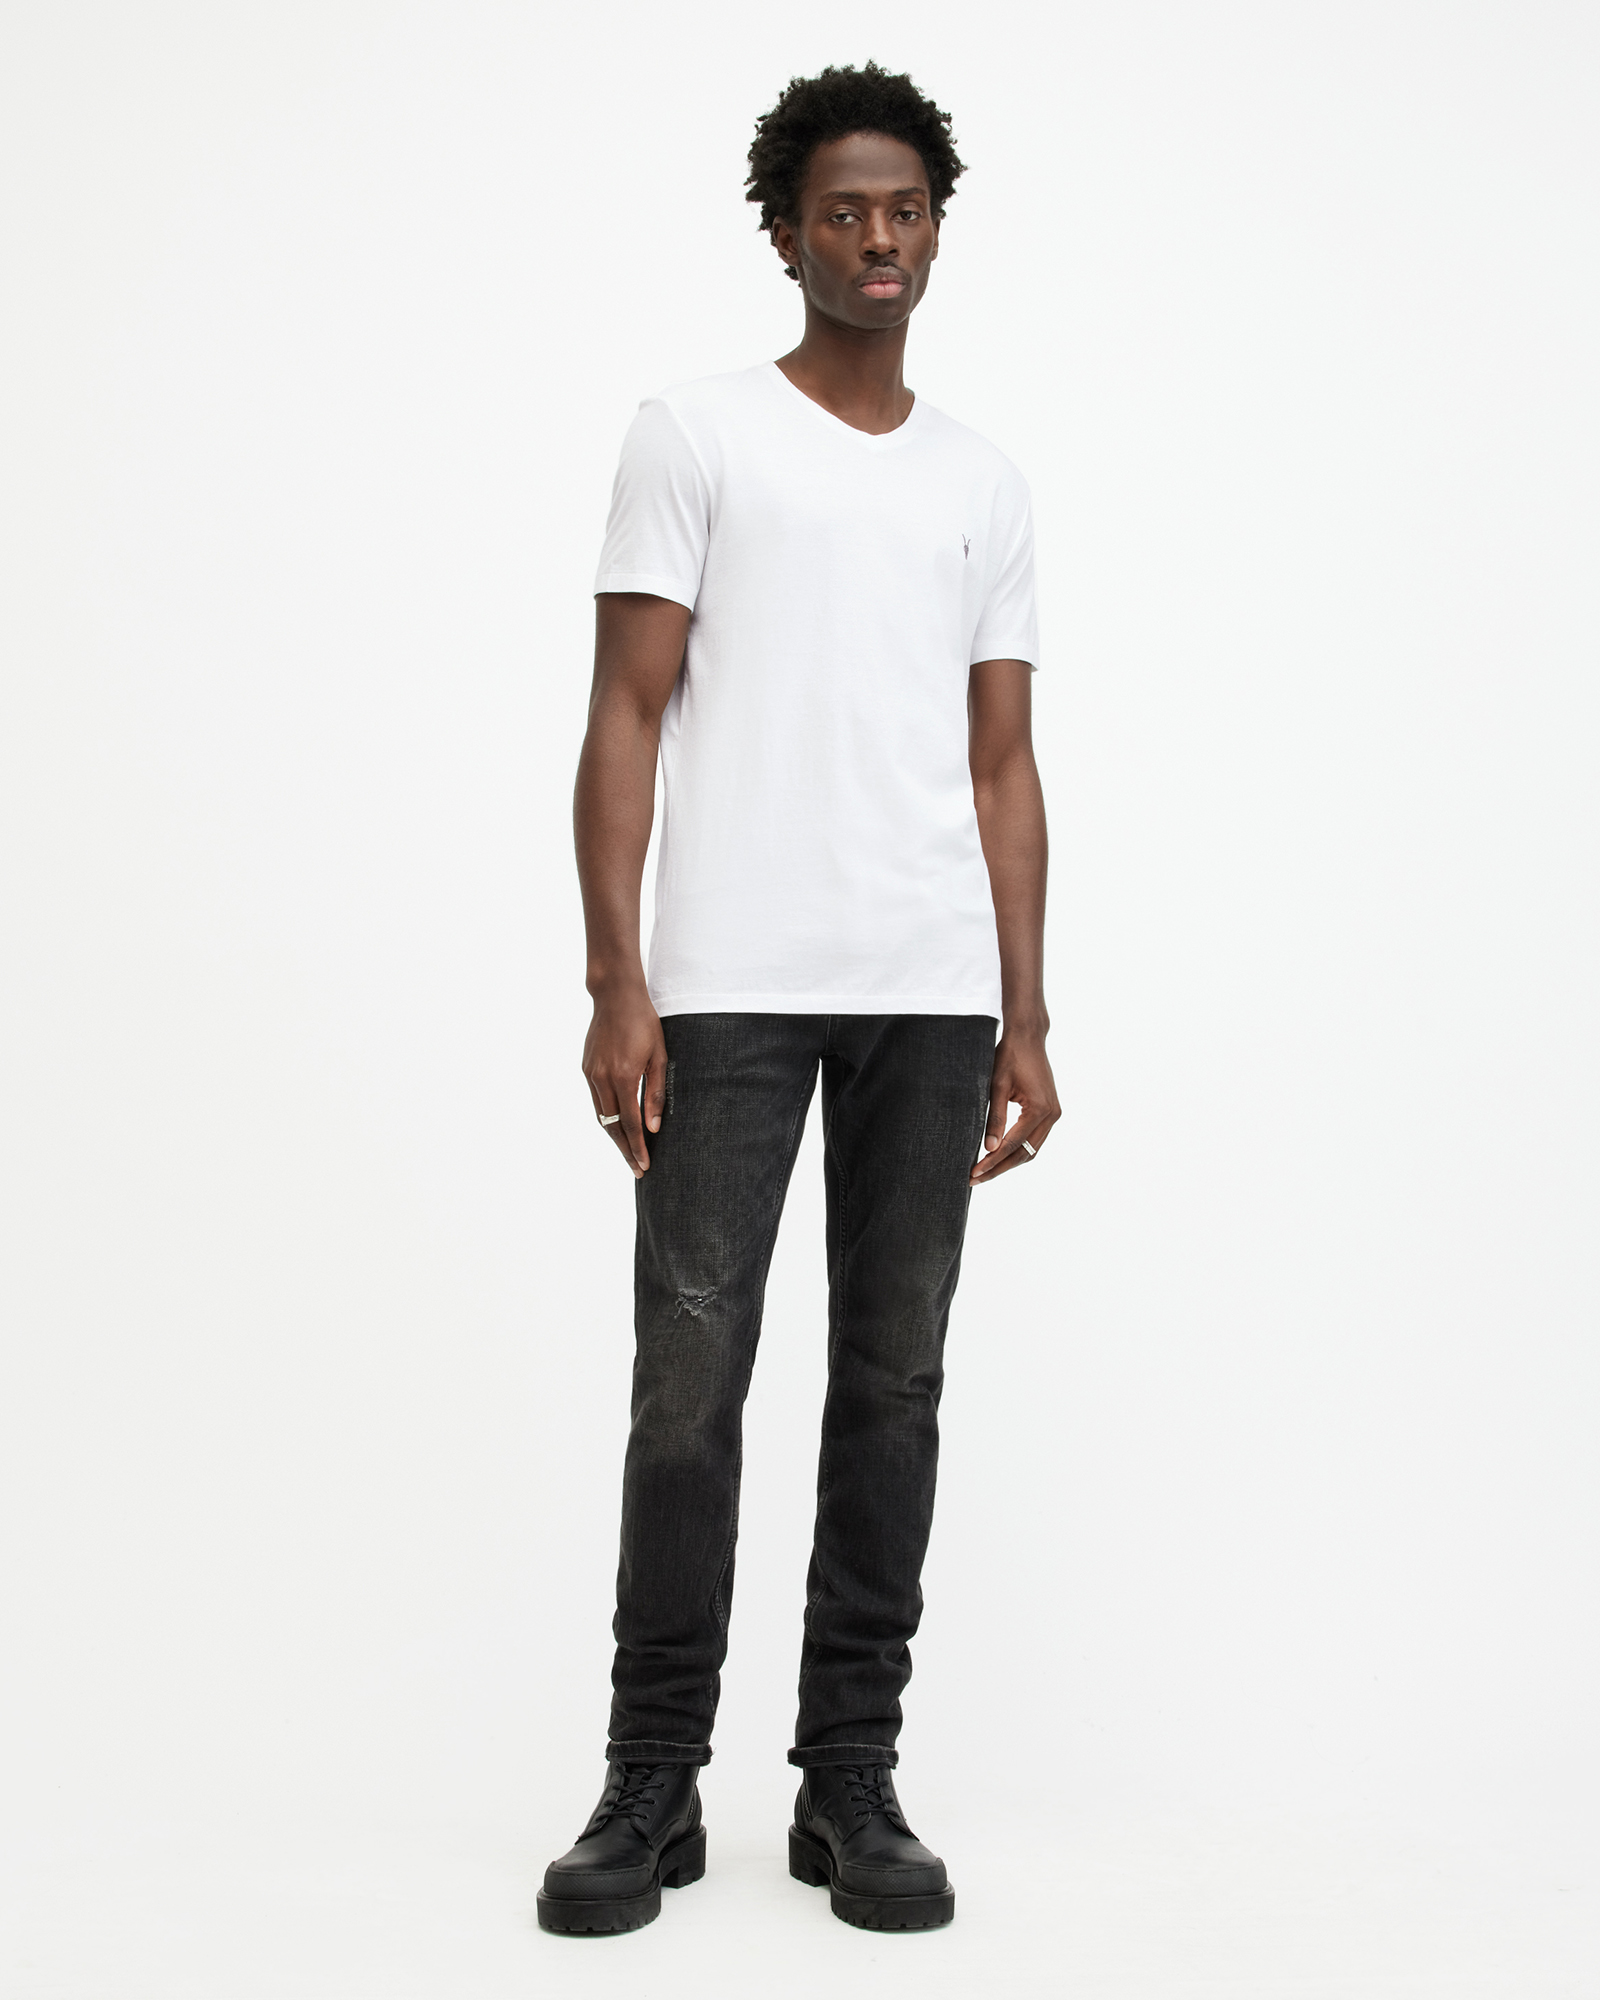 AllSaints Men's Cotton Lightweight Tonic Pullover V-Neck T-Shirt, White, Size: S